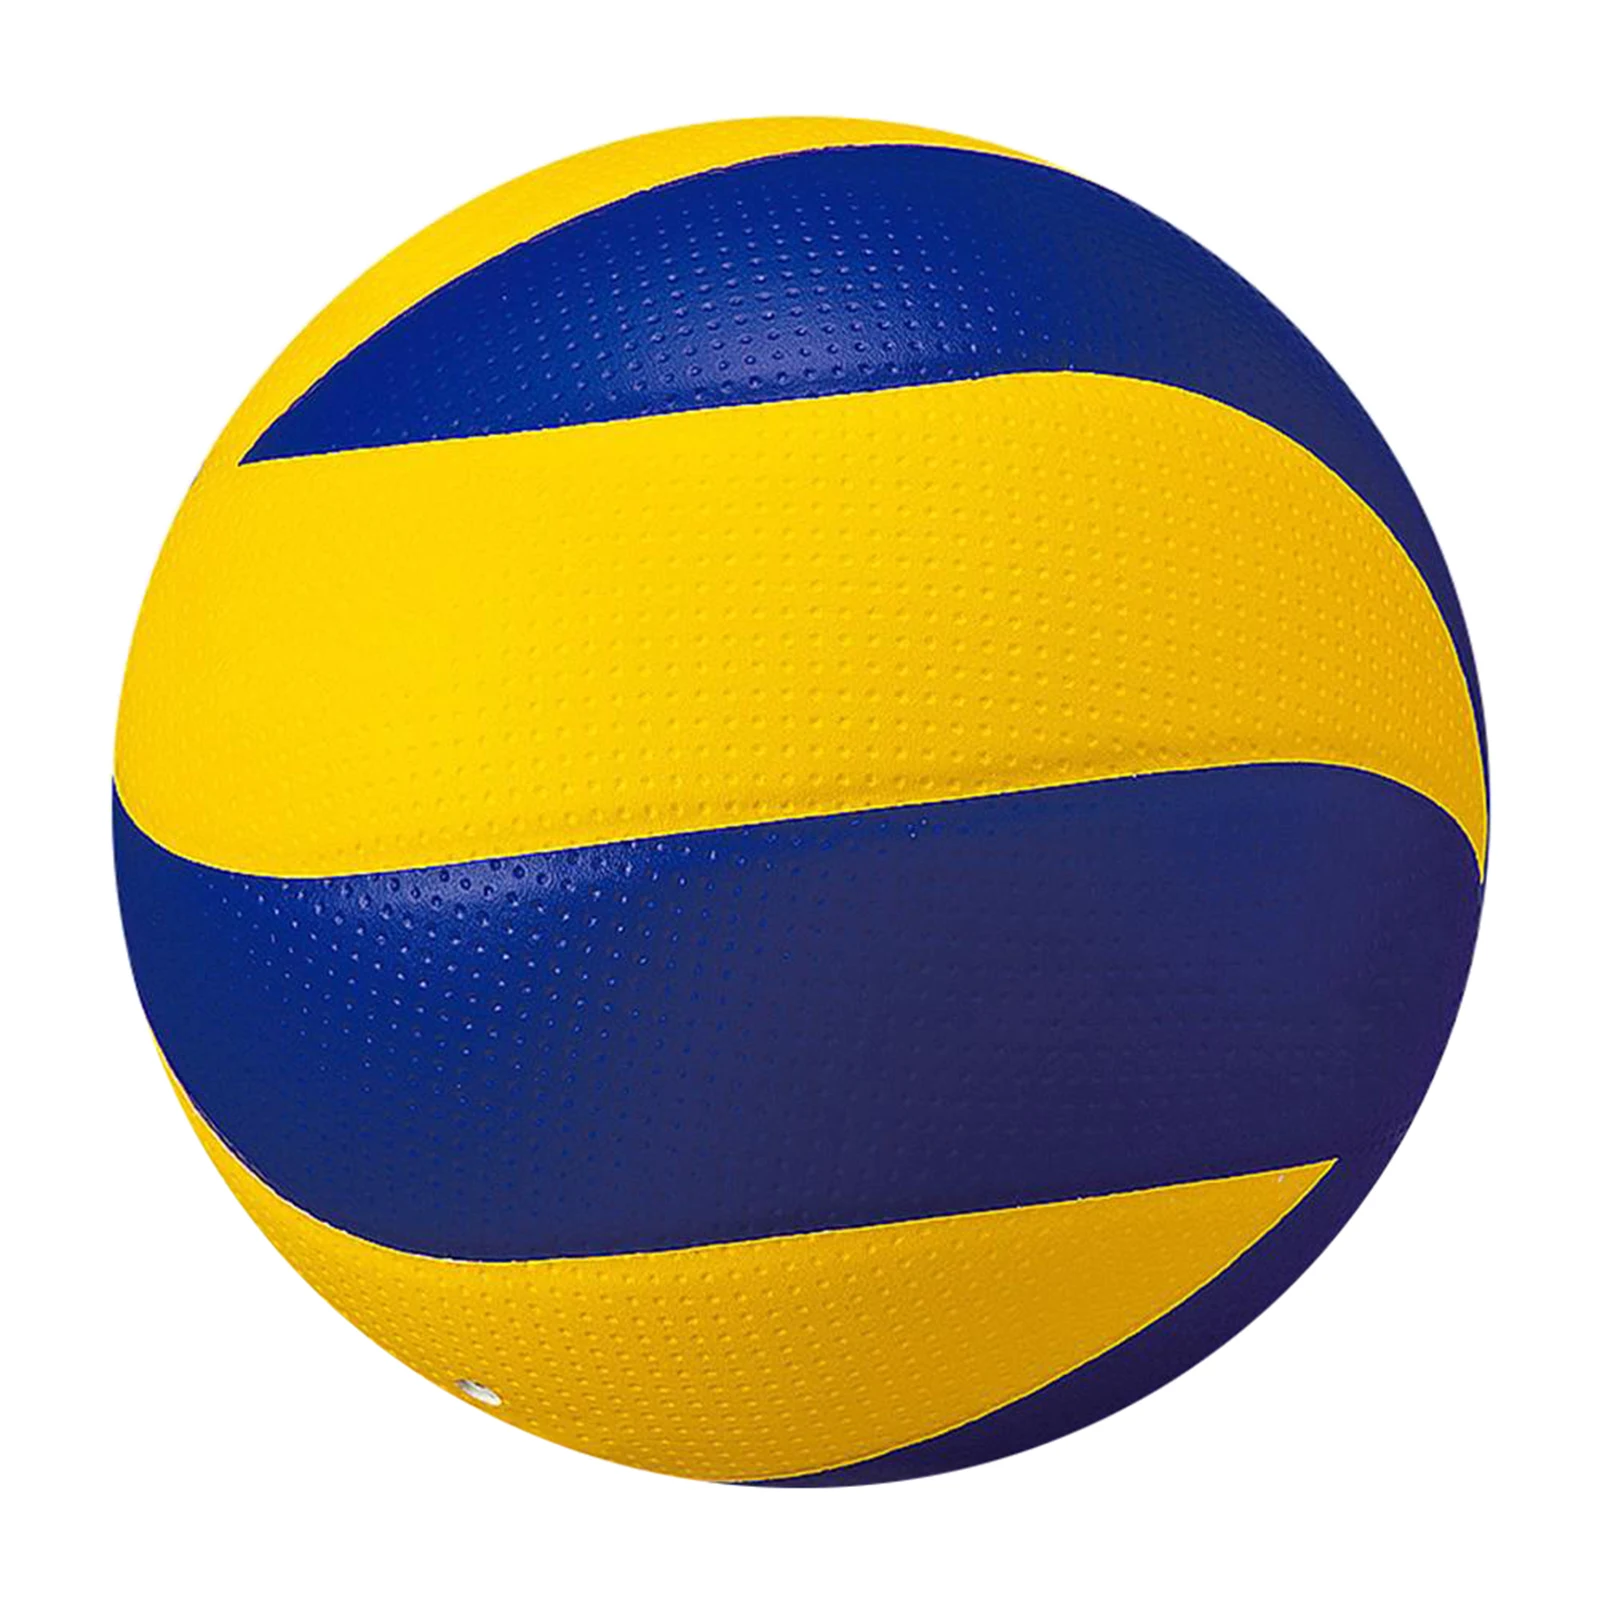 Size 5 Standard Beach Volleyball Outdoor Recreational Ball Game Training Play